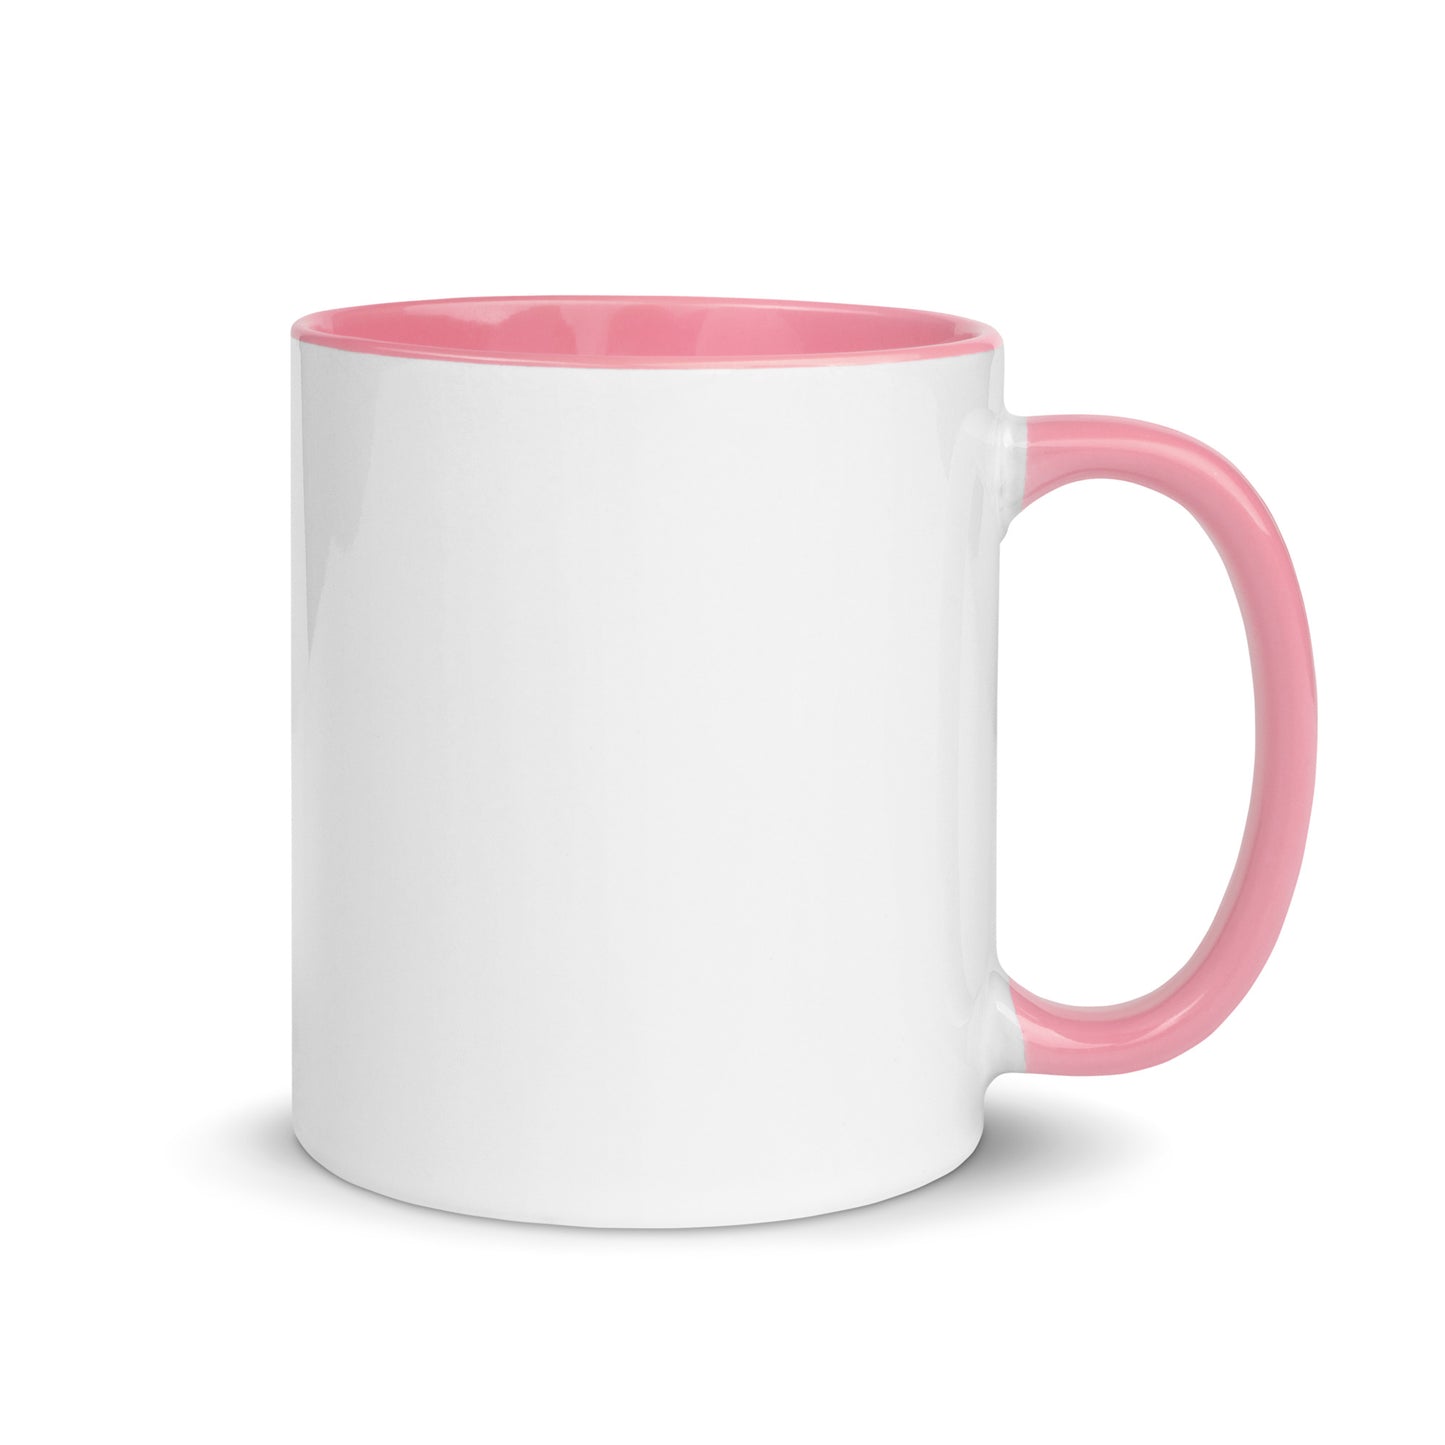 Flawsome mug